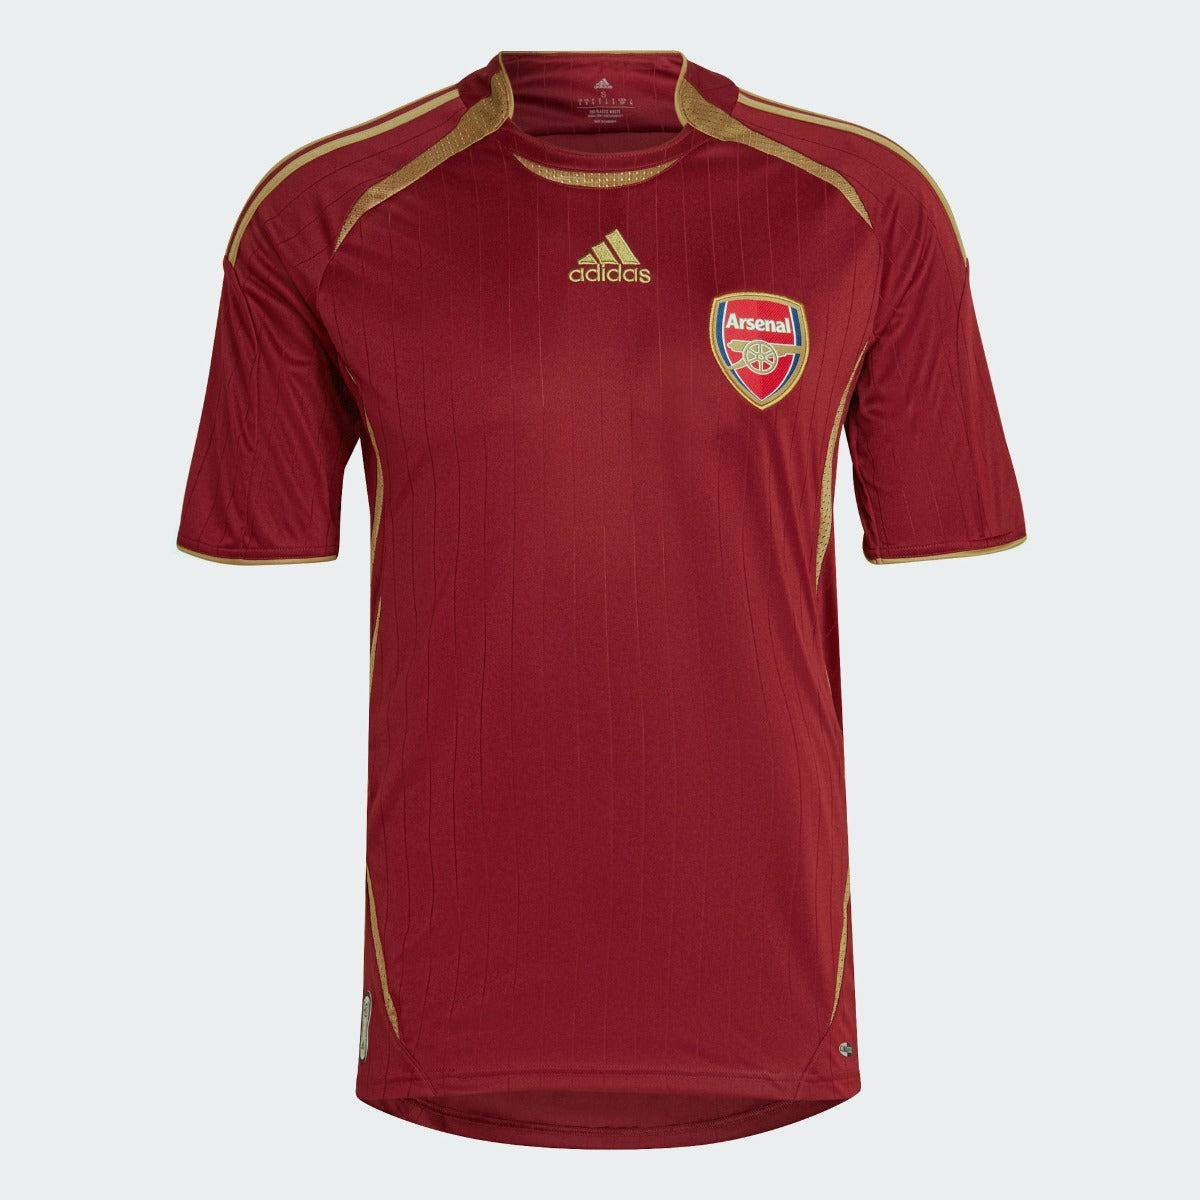 Adidas 2022 Arsenal Teamgeist Jersey - Noble Maroon (Front)